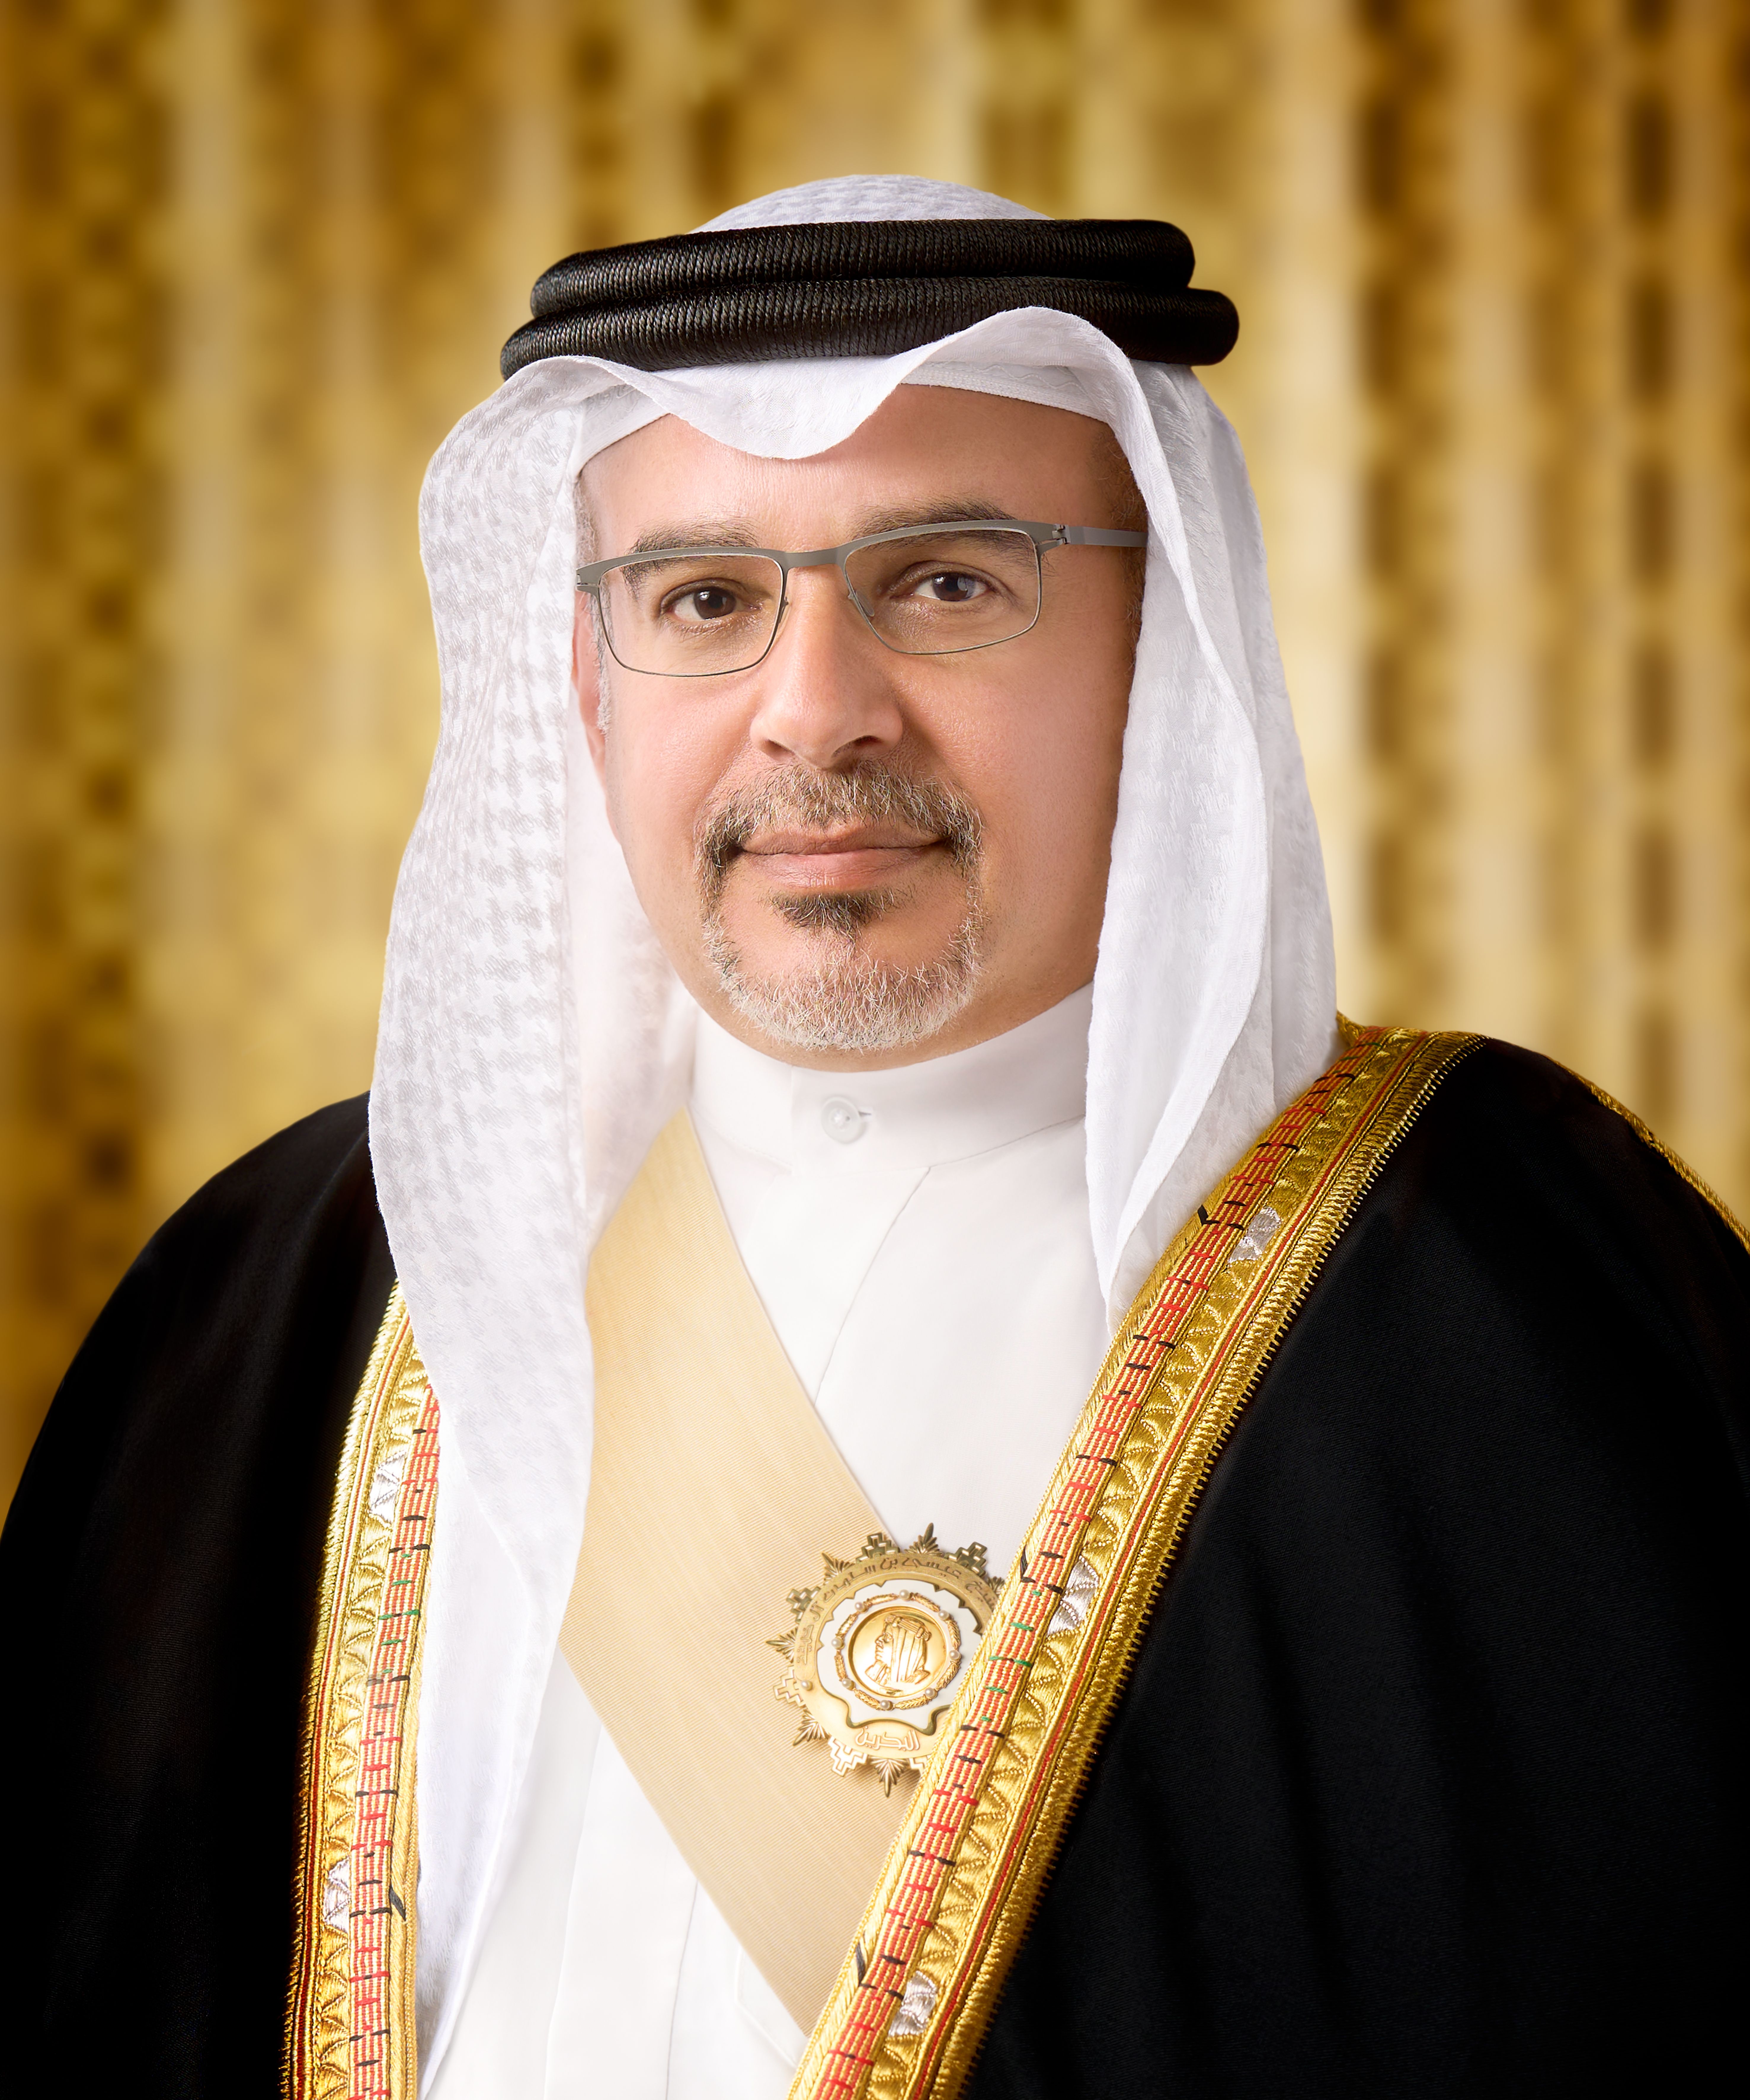 Хамада ибн ису аль халифу. Принц Салман Бин Хамад. Принц Салман Аль Халифа. Hamad Ibn khalifa University.